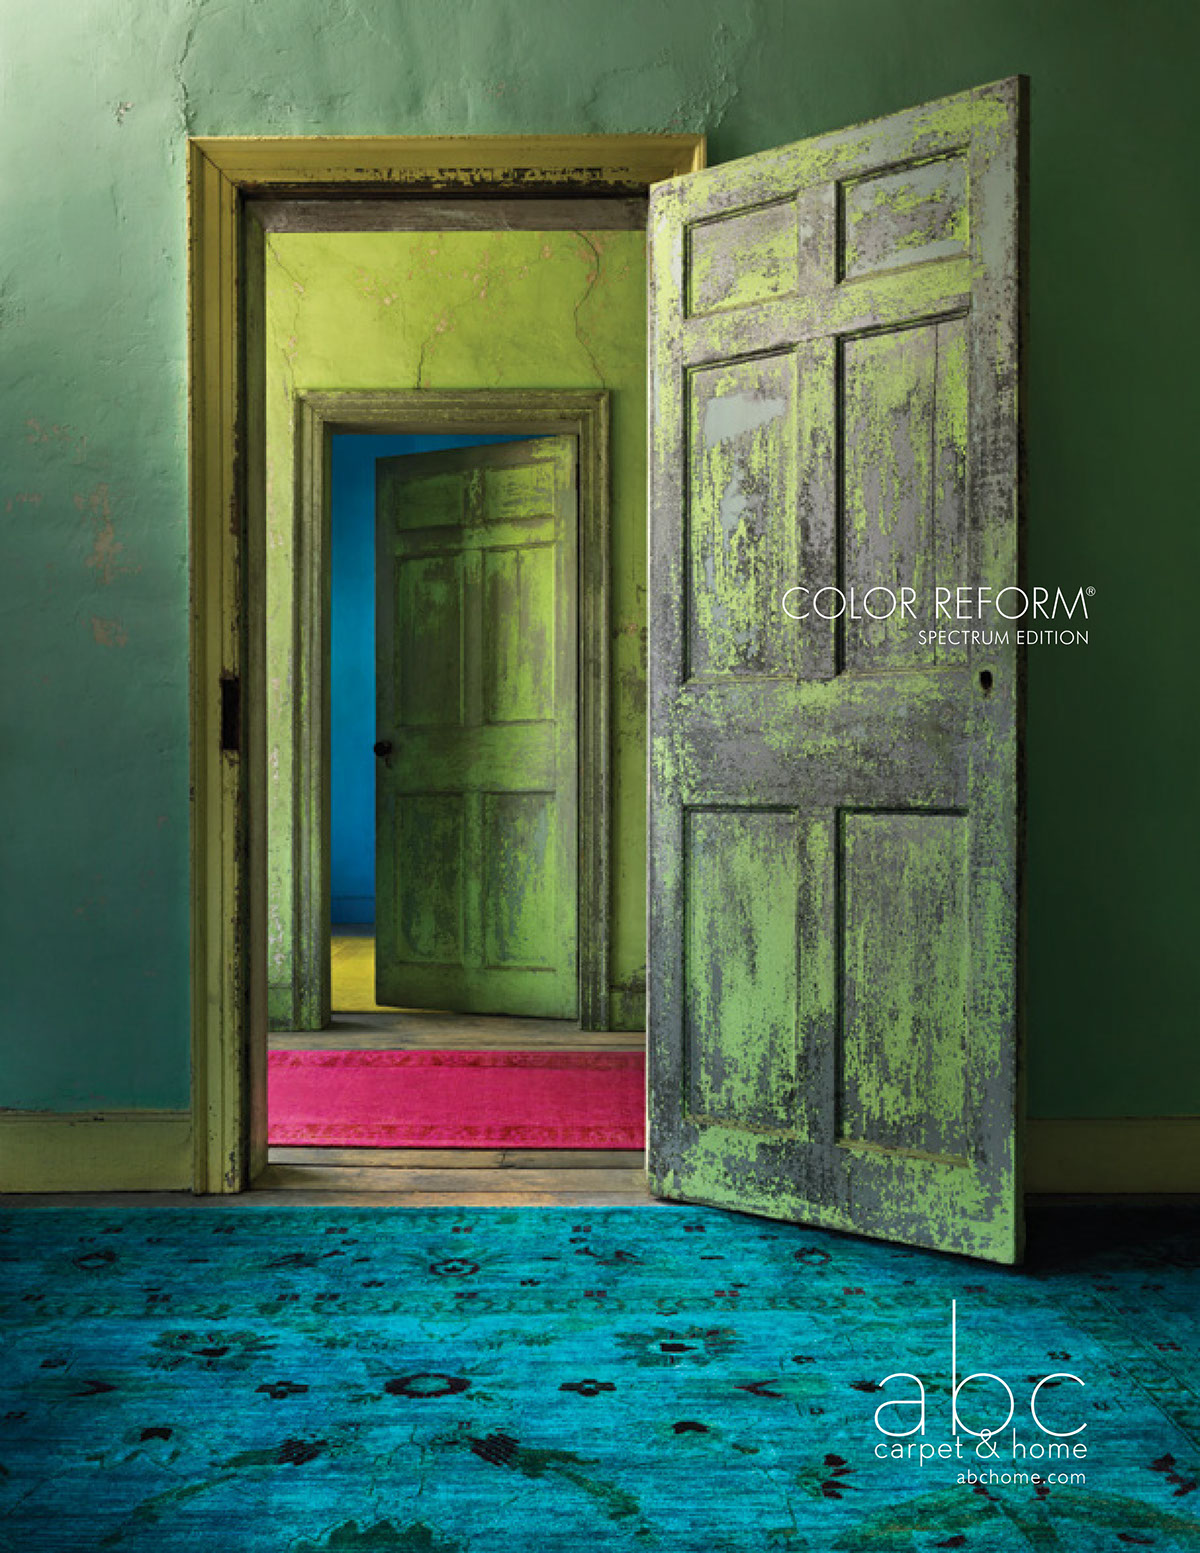 rugs carpets interiors color modern house design art Advertising 